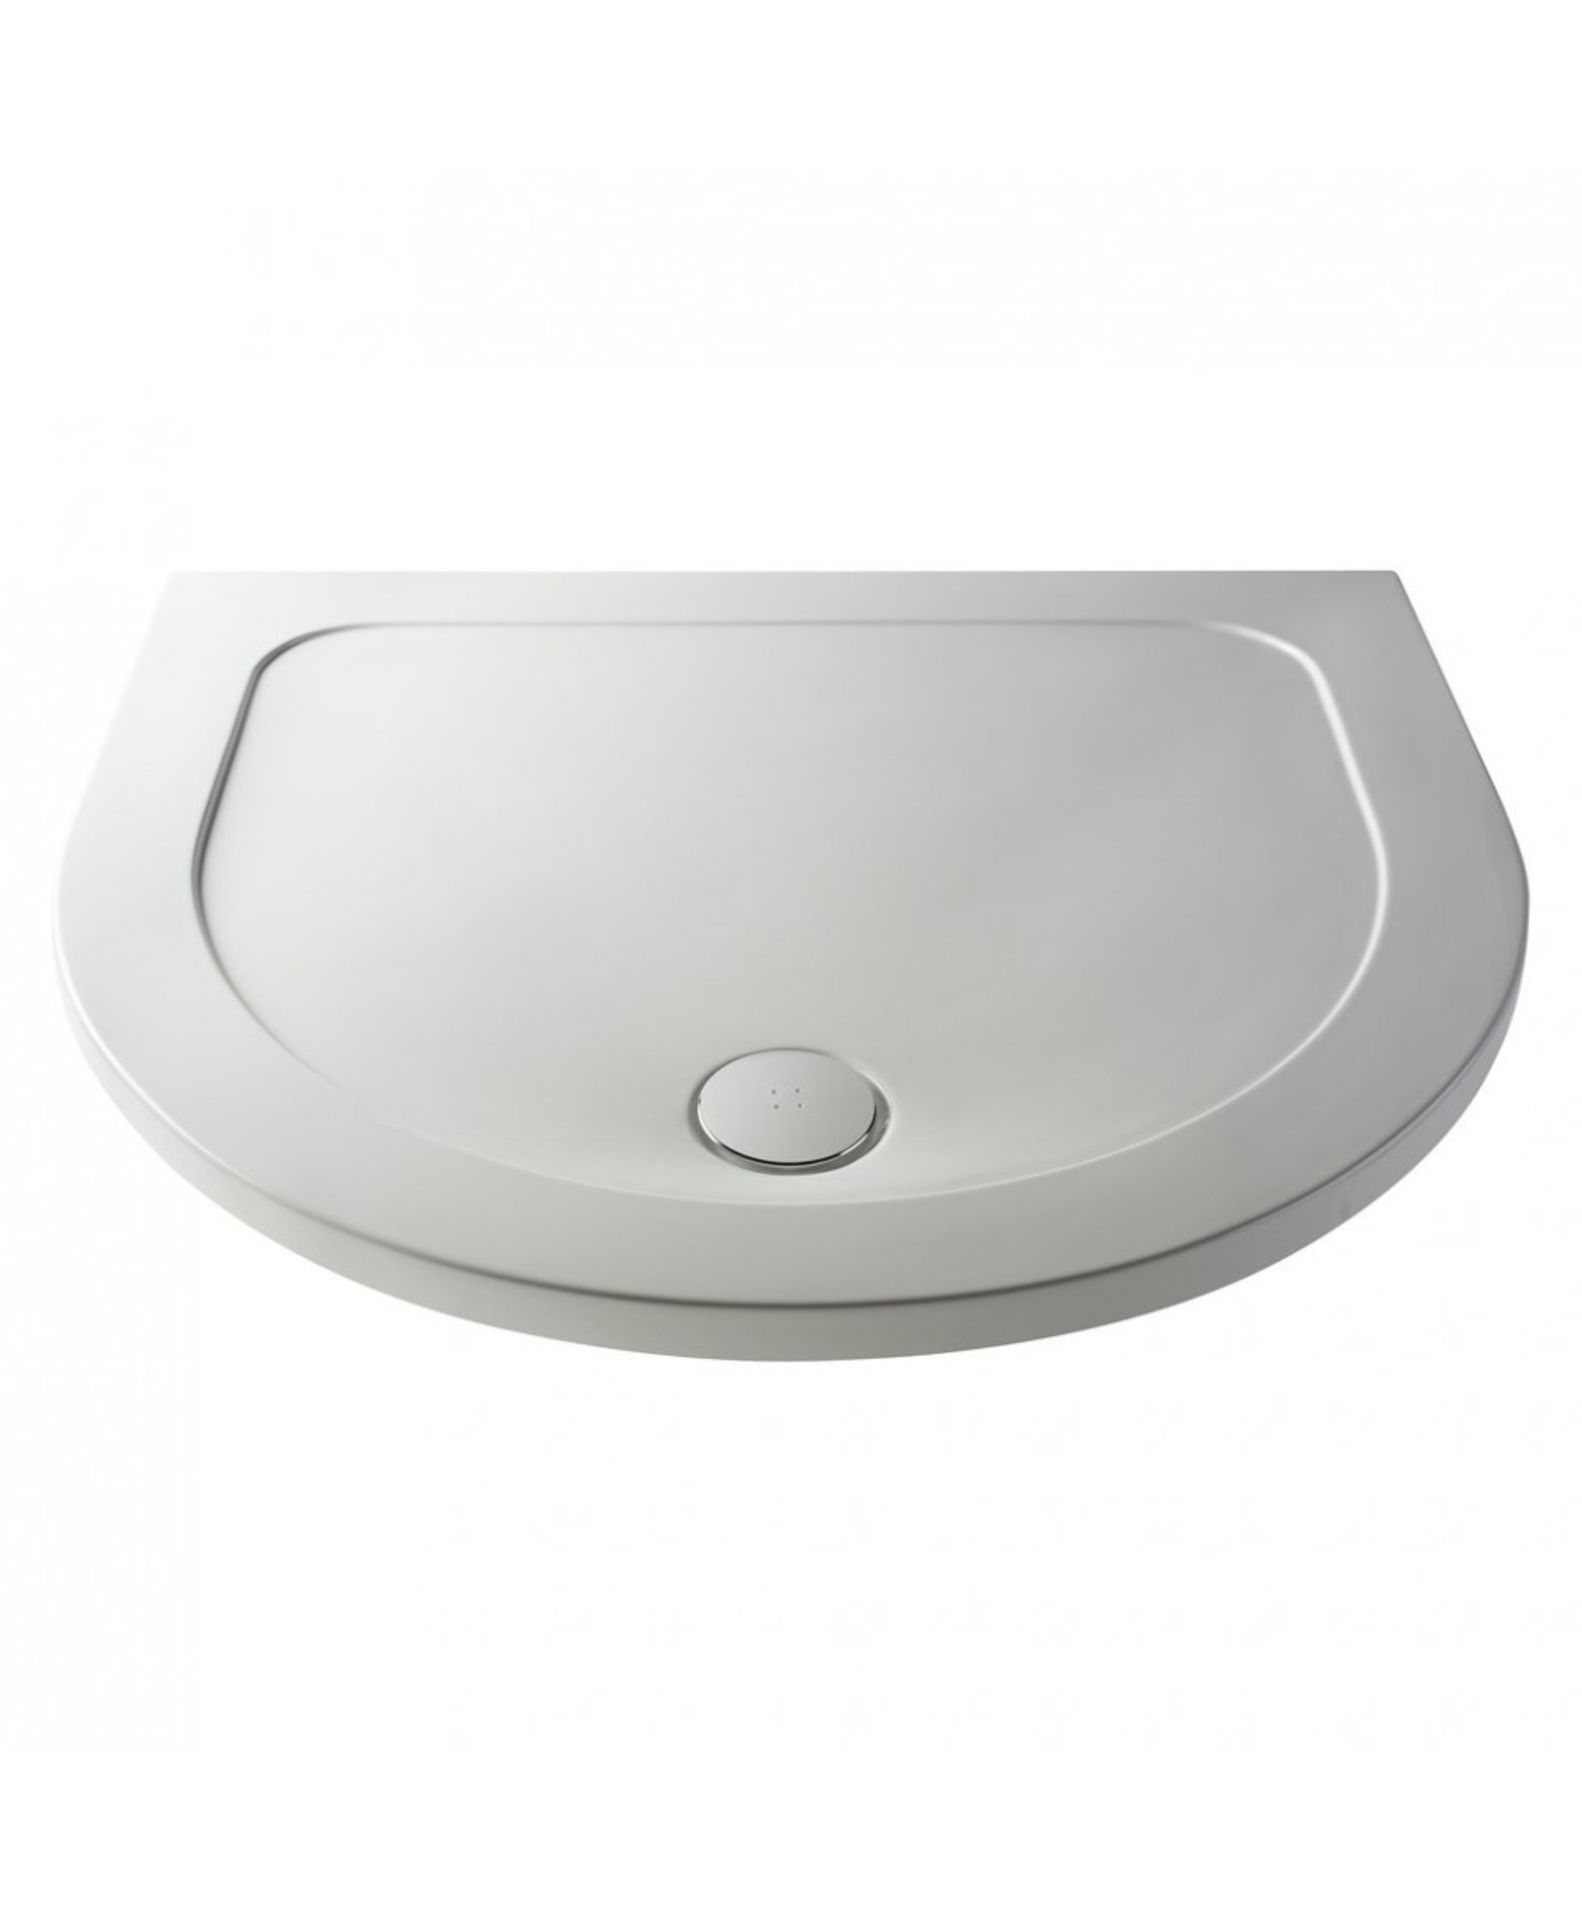 NEW (PC41) Twyfords 770mm Hydro D Shape White Shower tray.Low profile ultra slim design Gel coa...